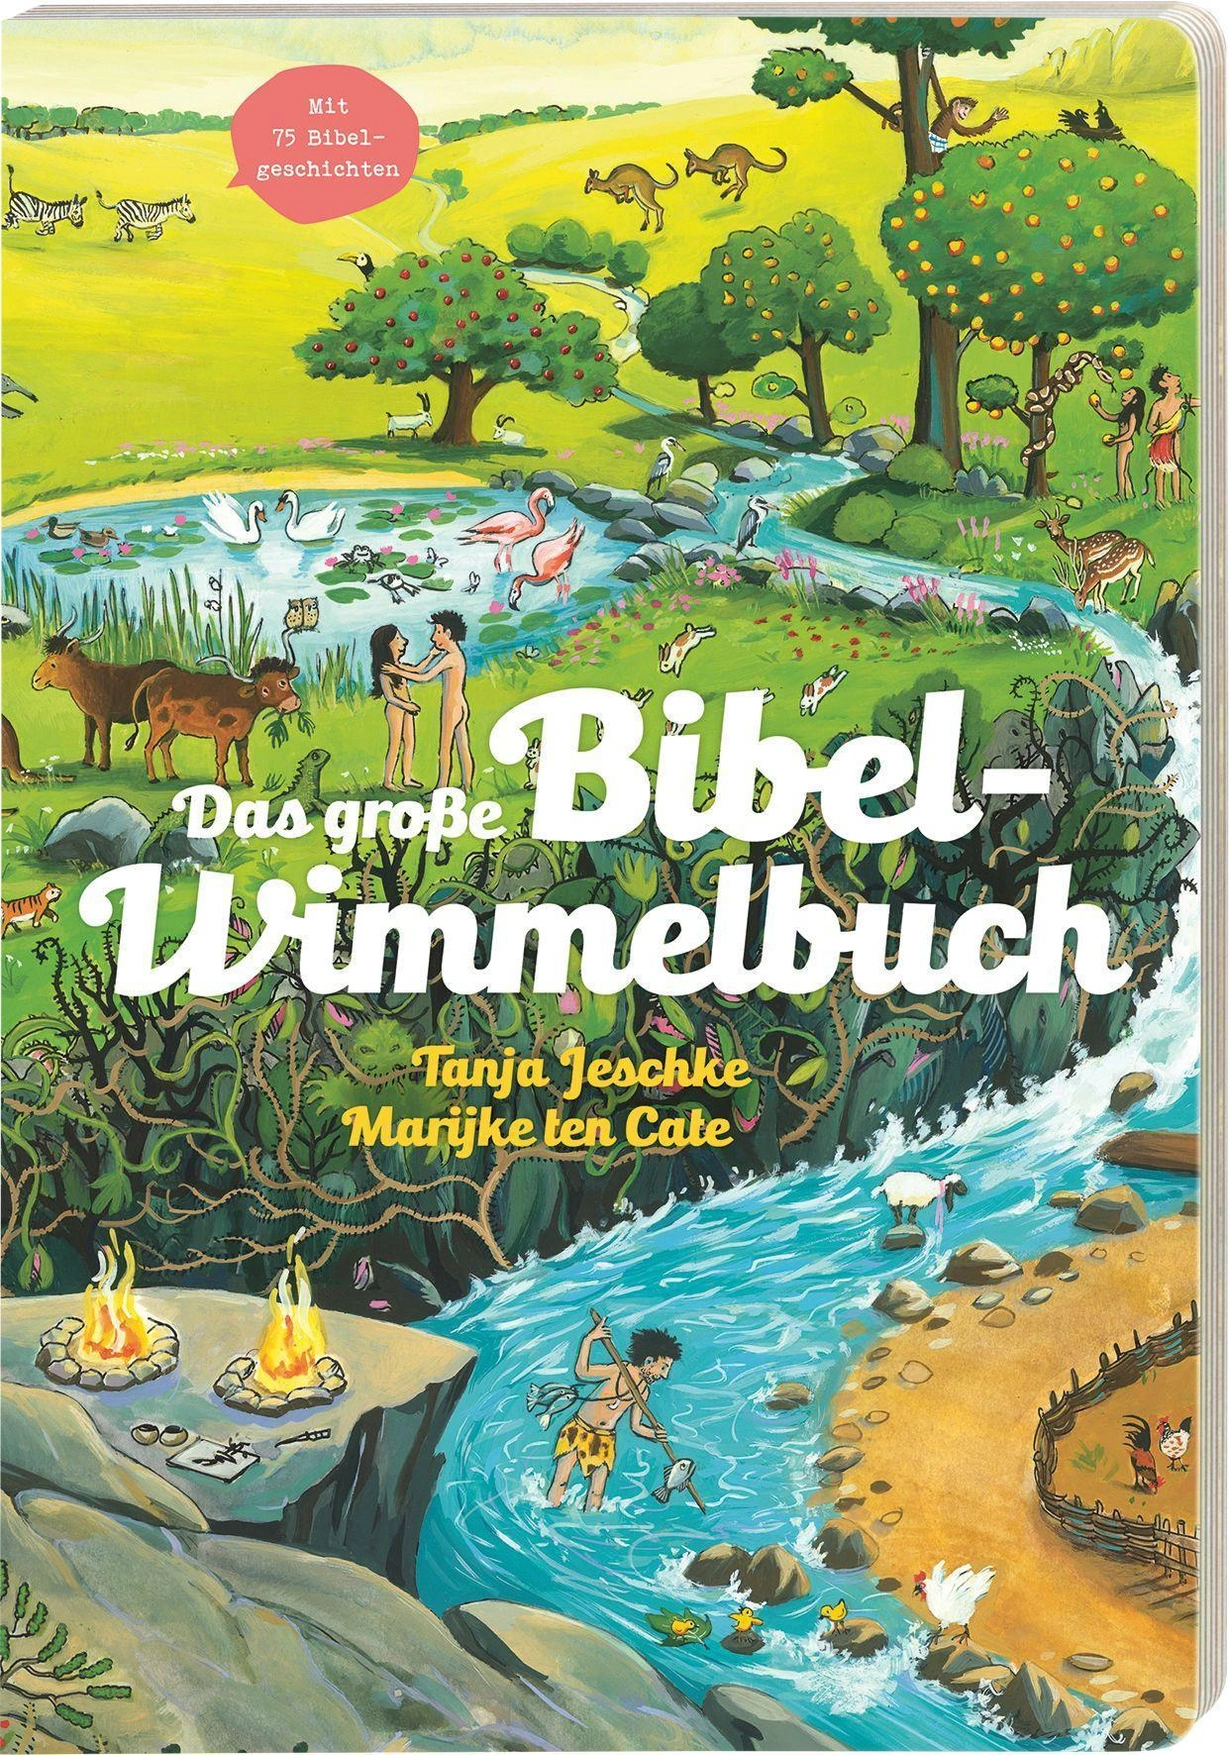 Das grosse Bibel-Wimmelbuch